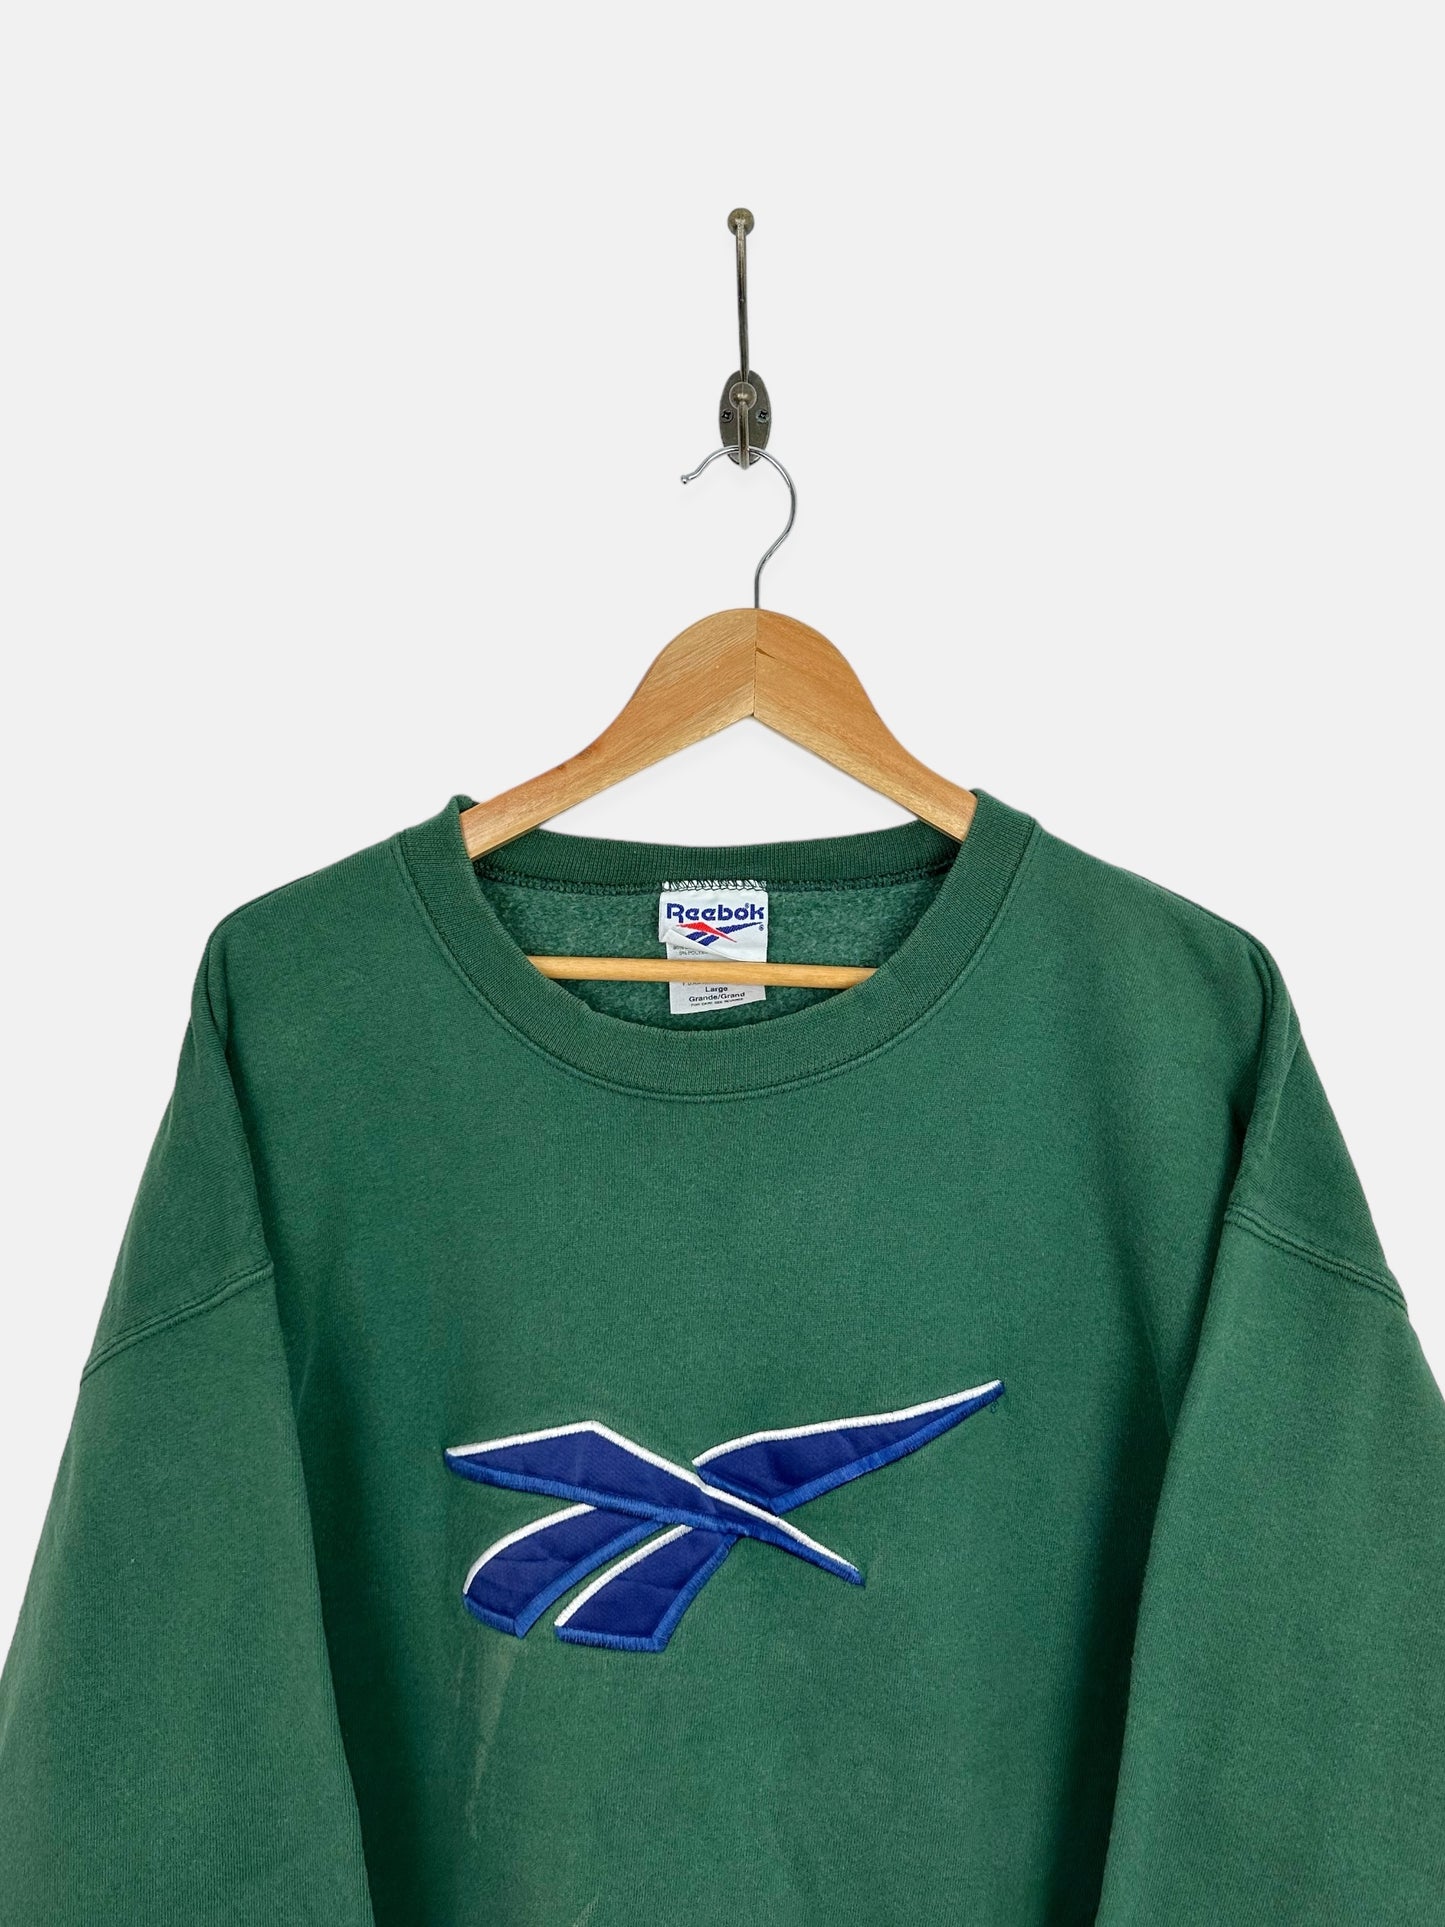 90's Reebok USA Made Embroidered Vintage Sweatshirt Size L